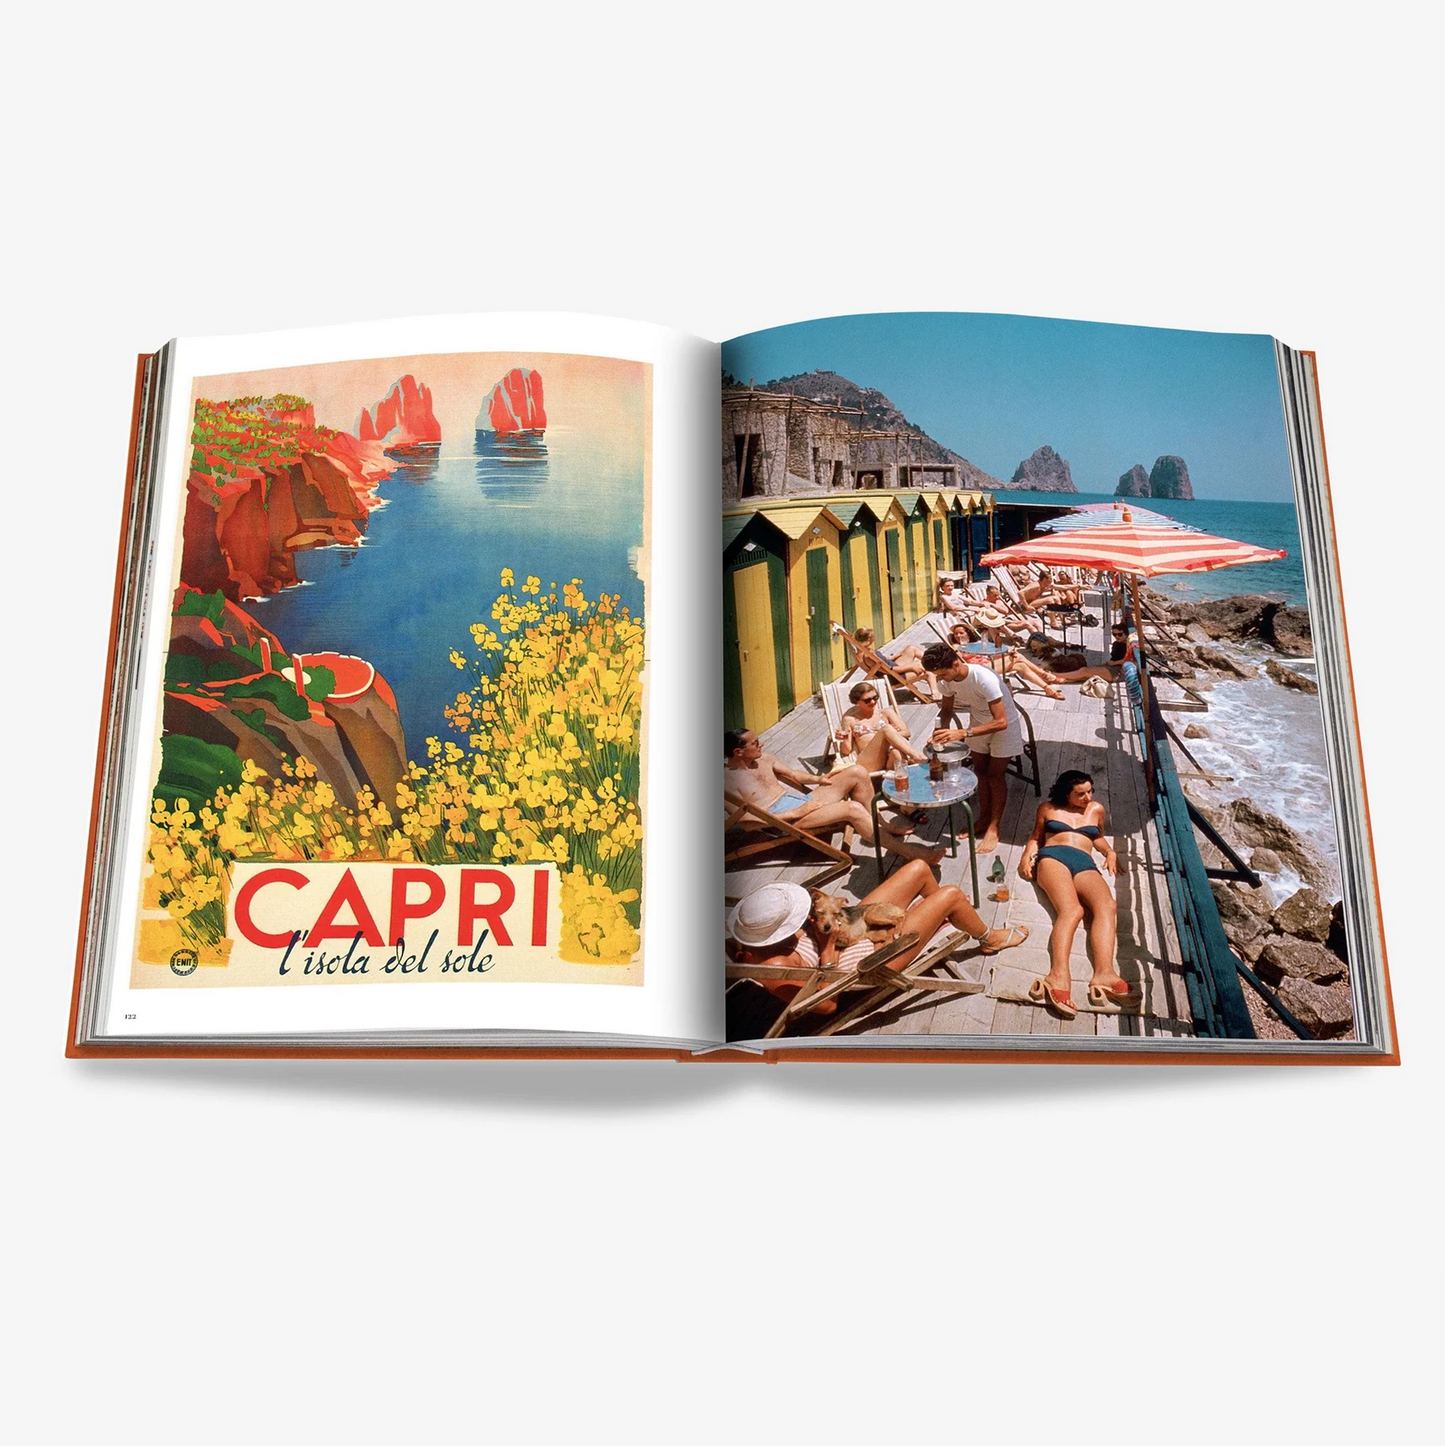 "Capri Dolce Vita" Book